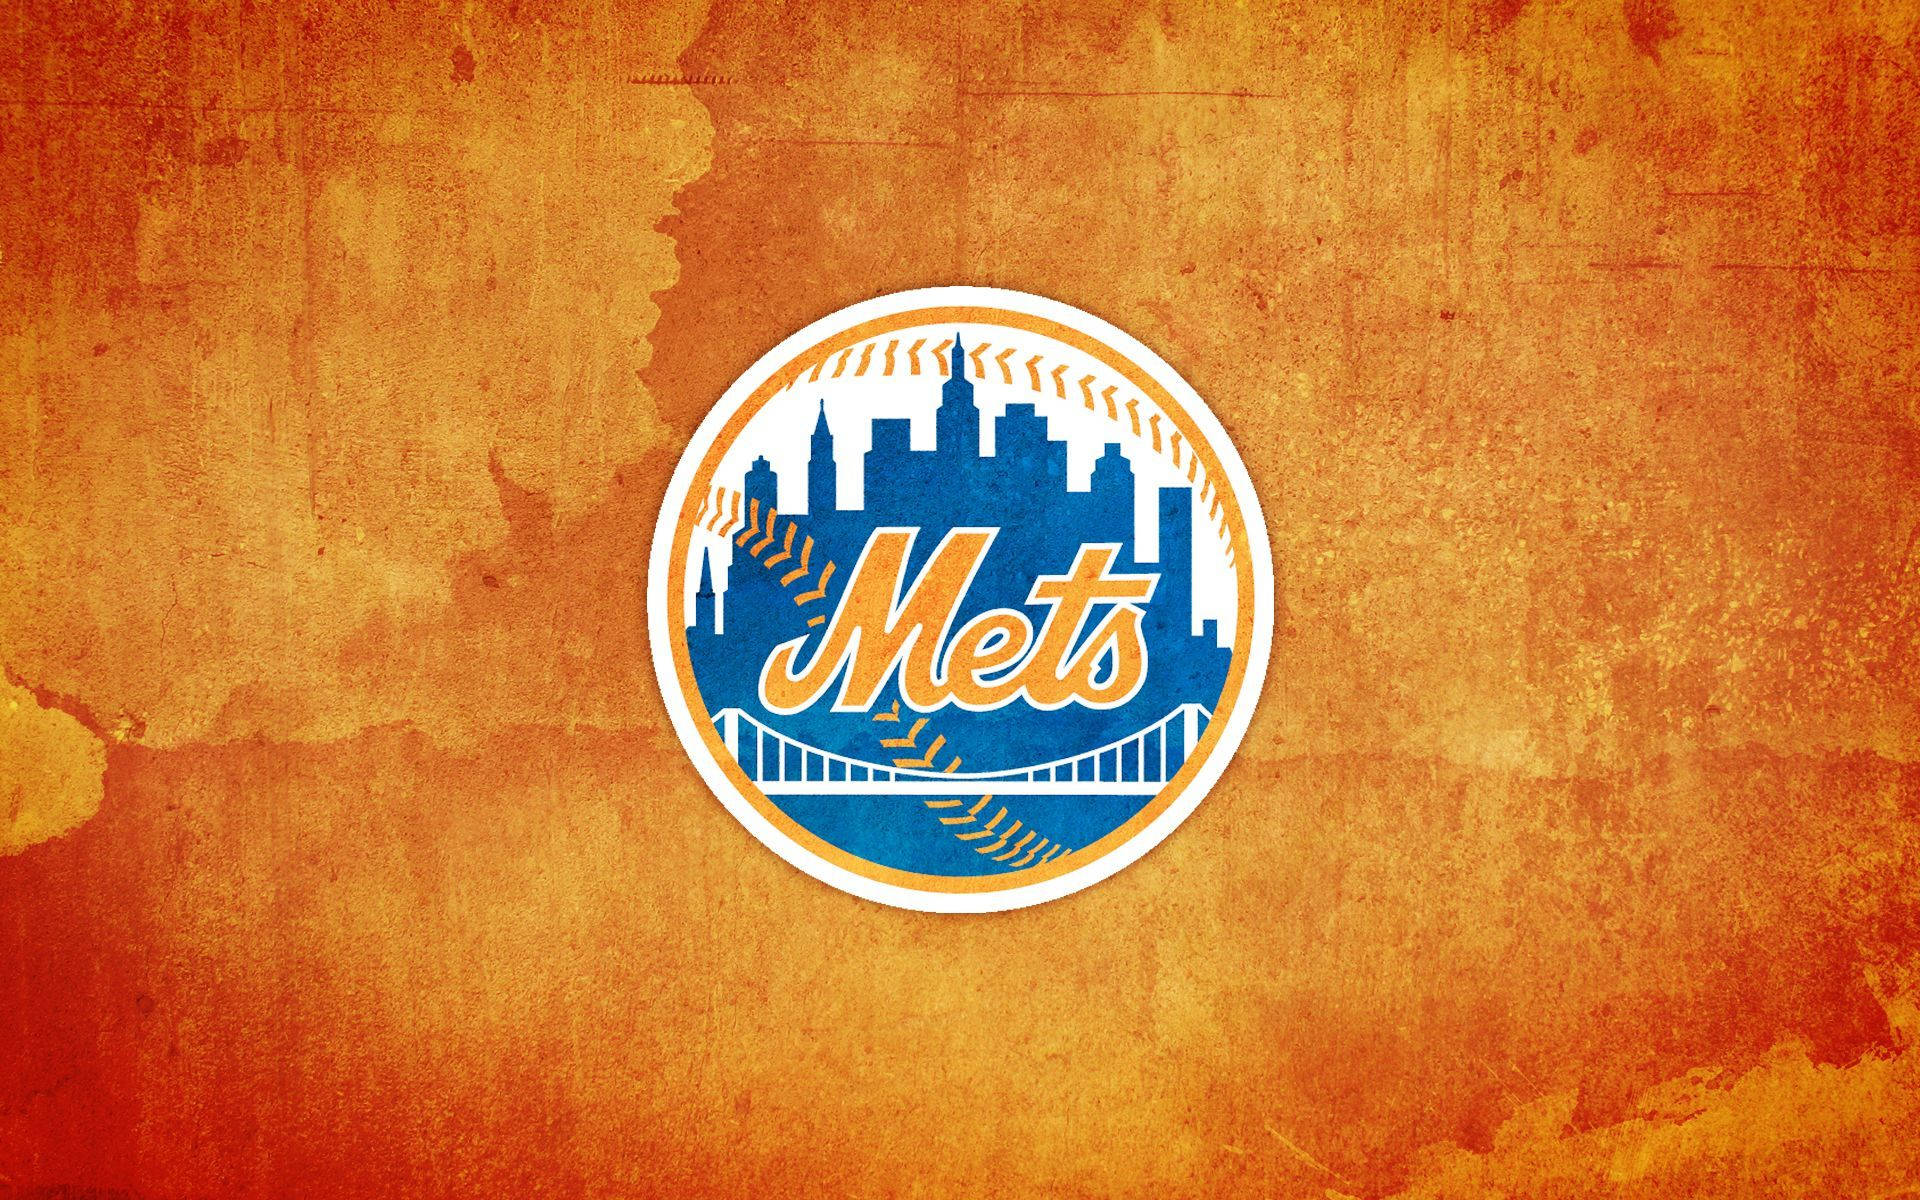 New York Mets Textured Orange Background